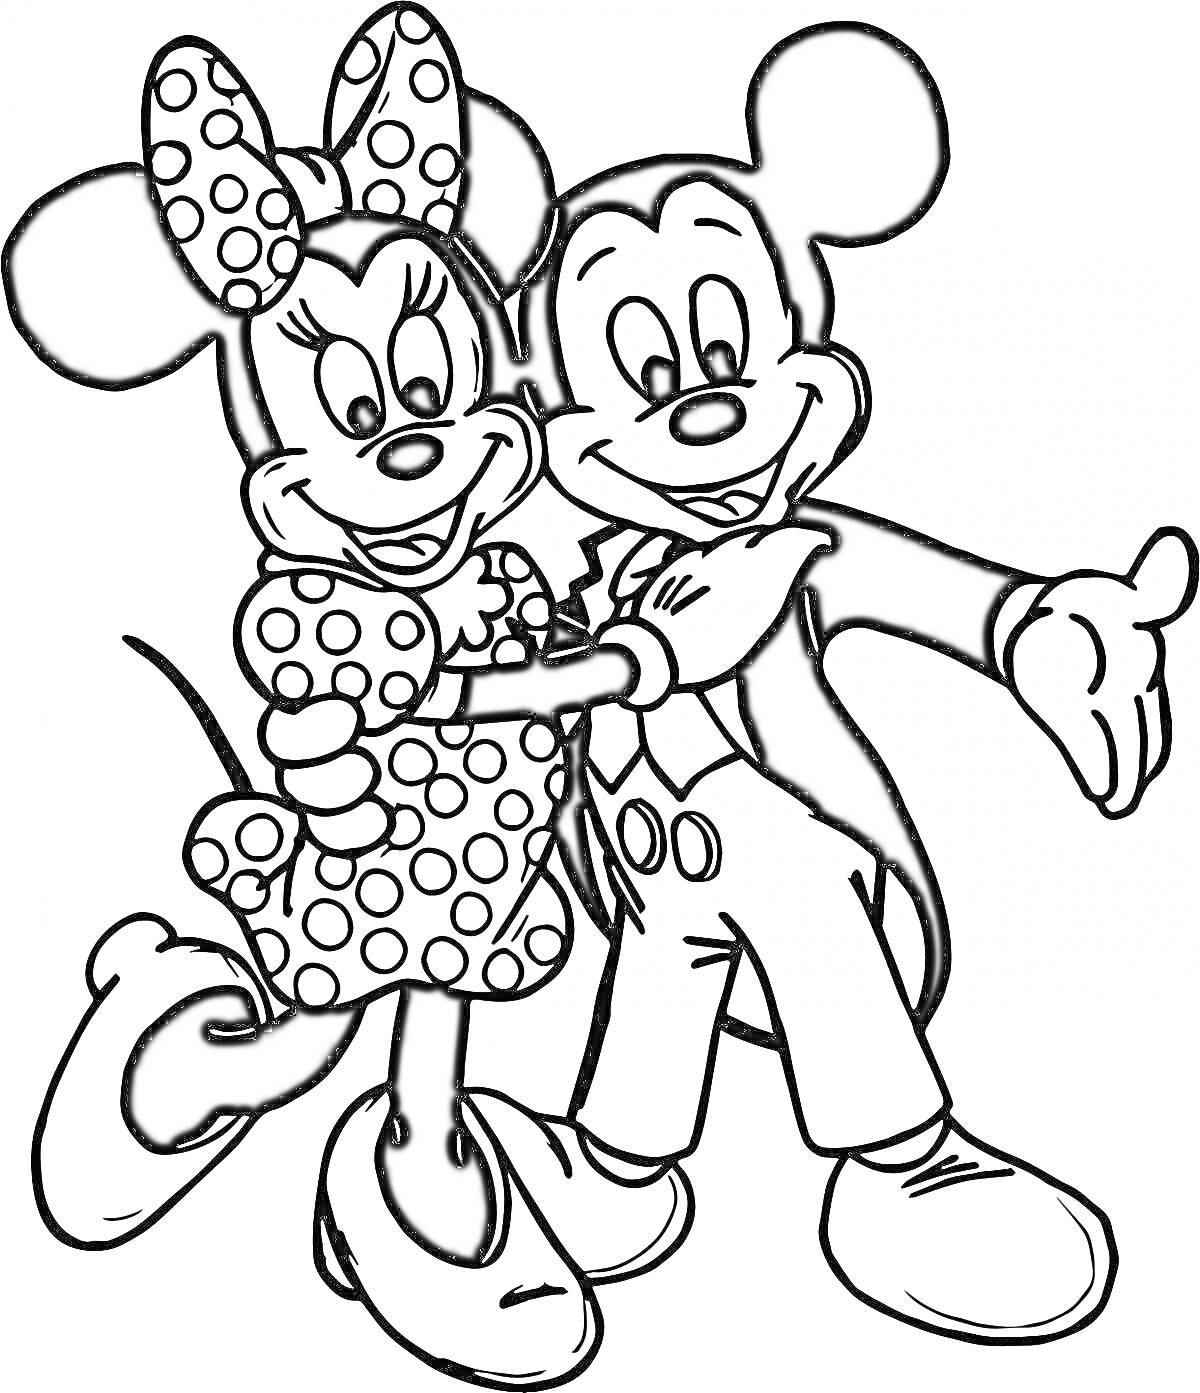 Раскраска Микки Маус и Минни Маус в нарядной одежде